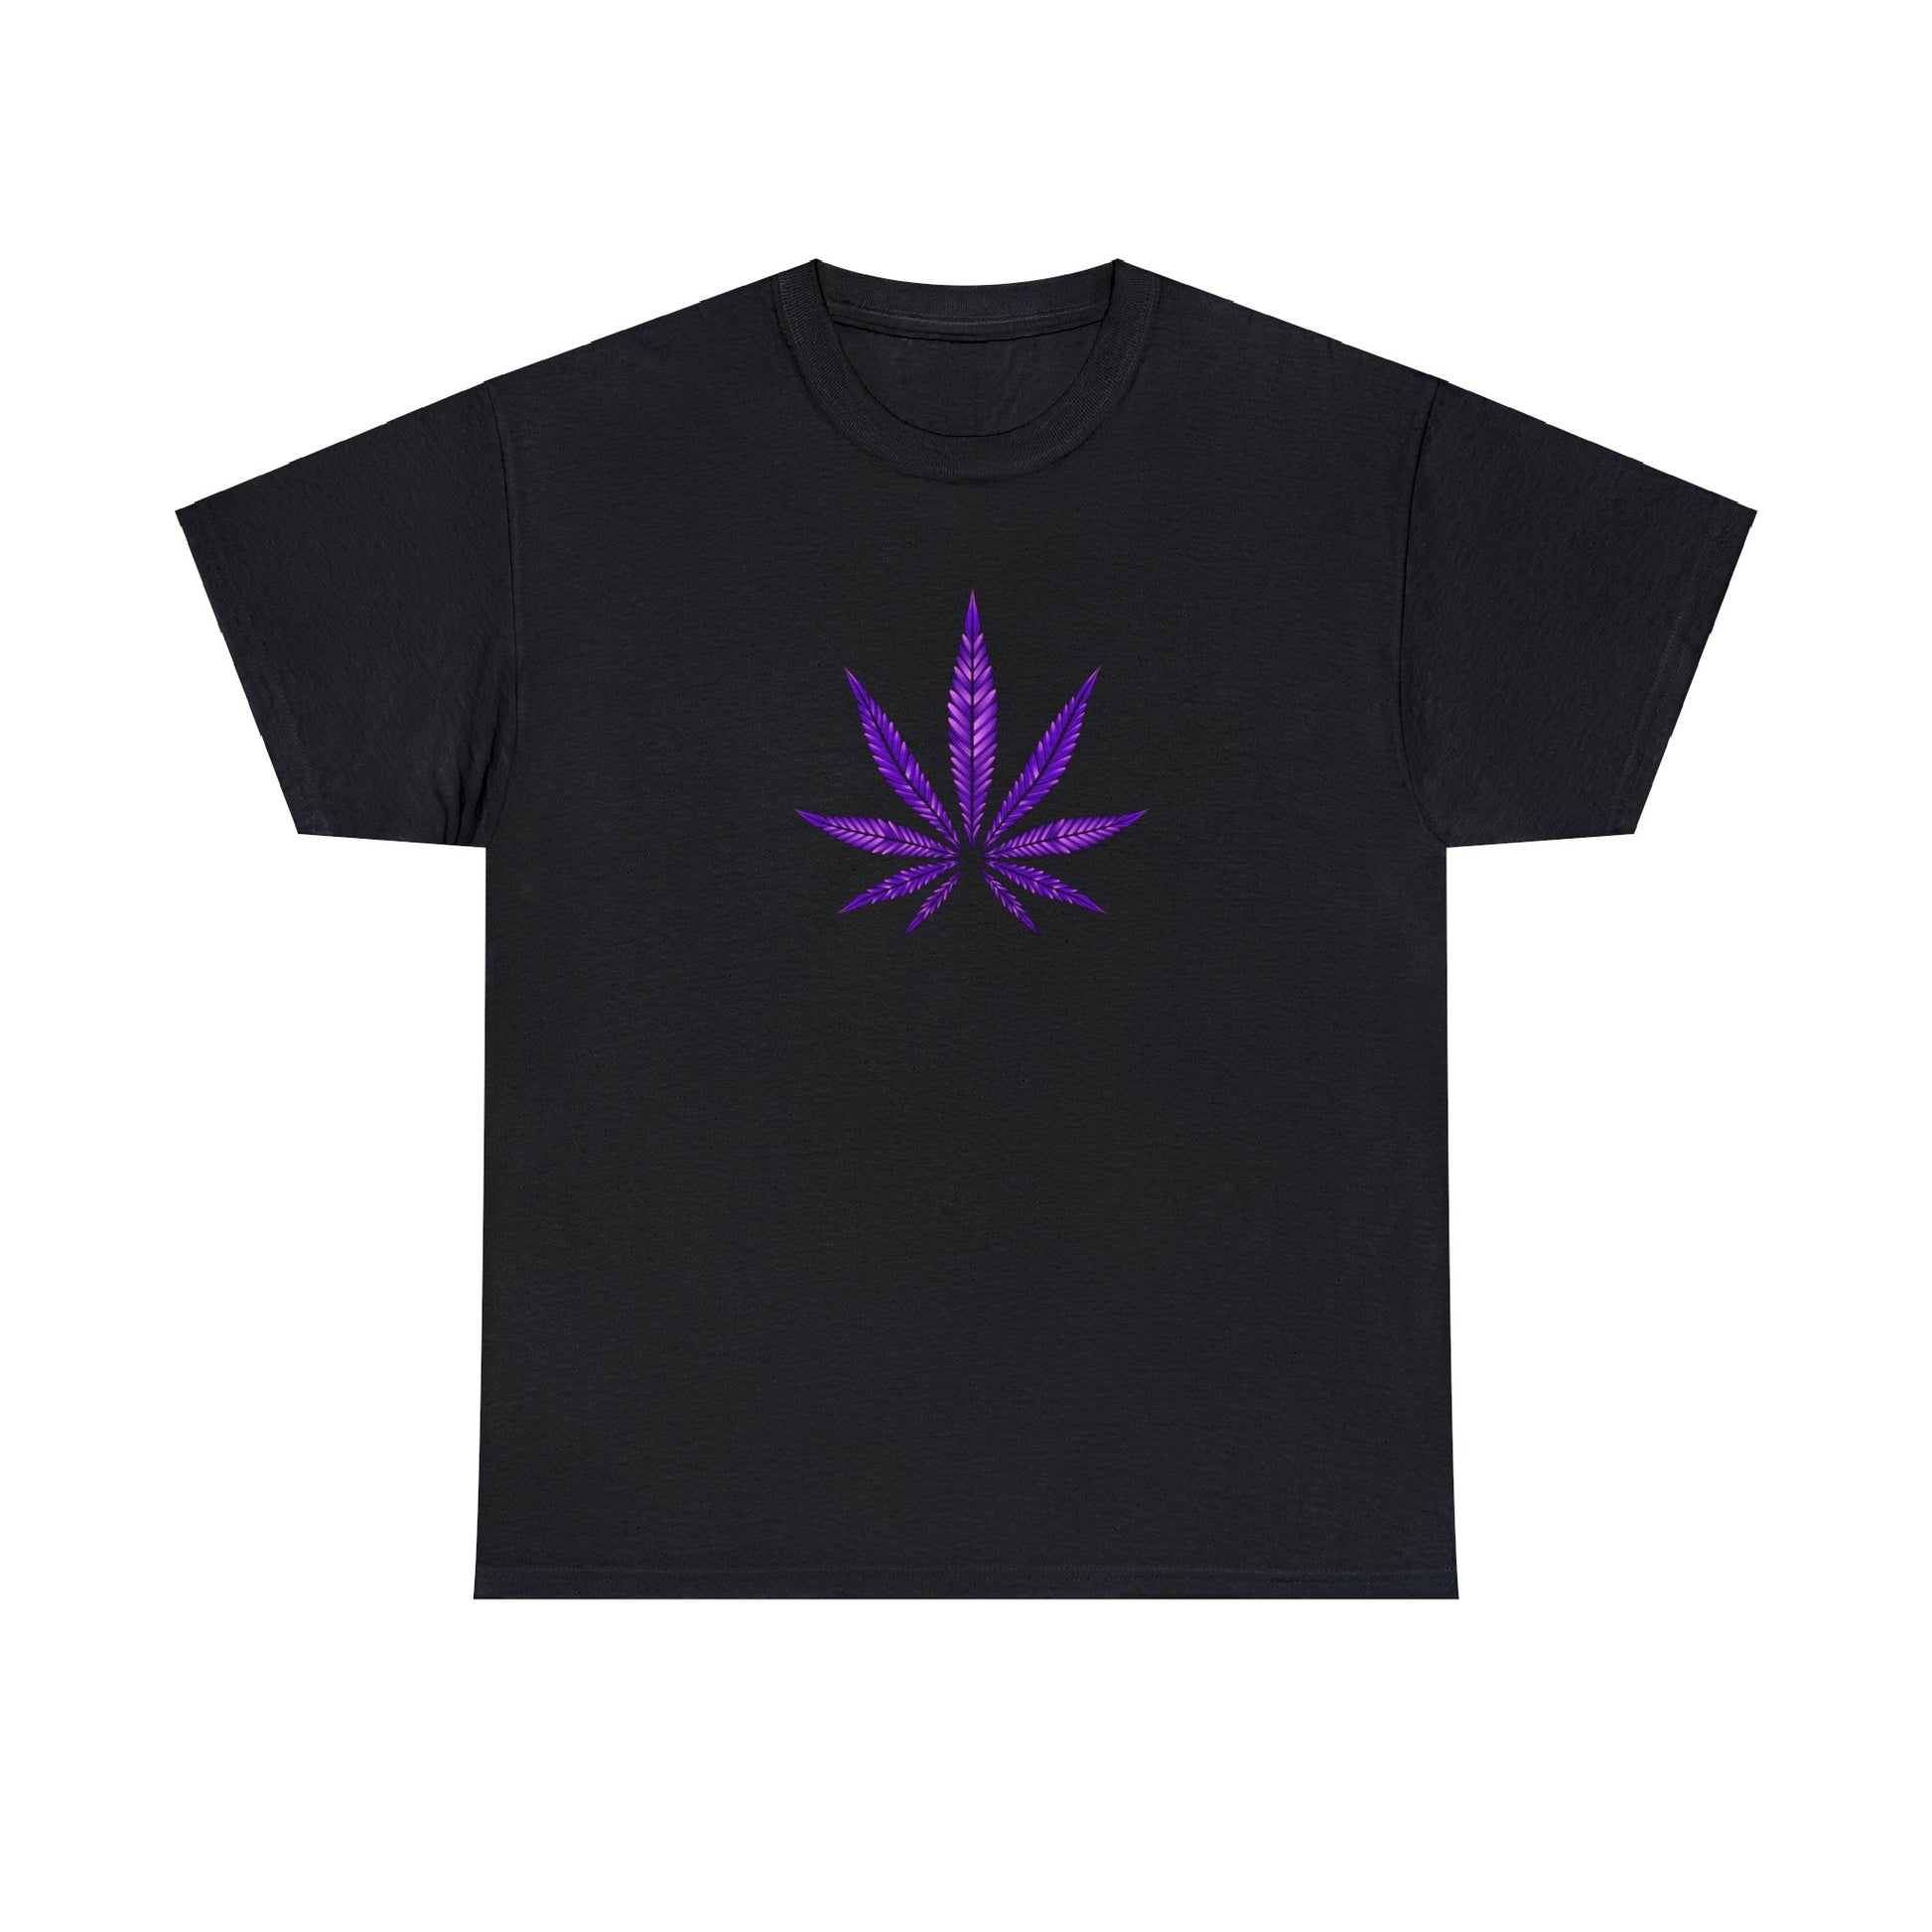 Vibrant-colored Purple Cannabis Leaf Tee, reflecting marijuana culture.